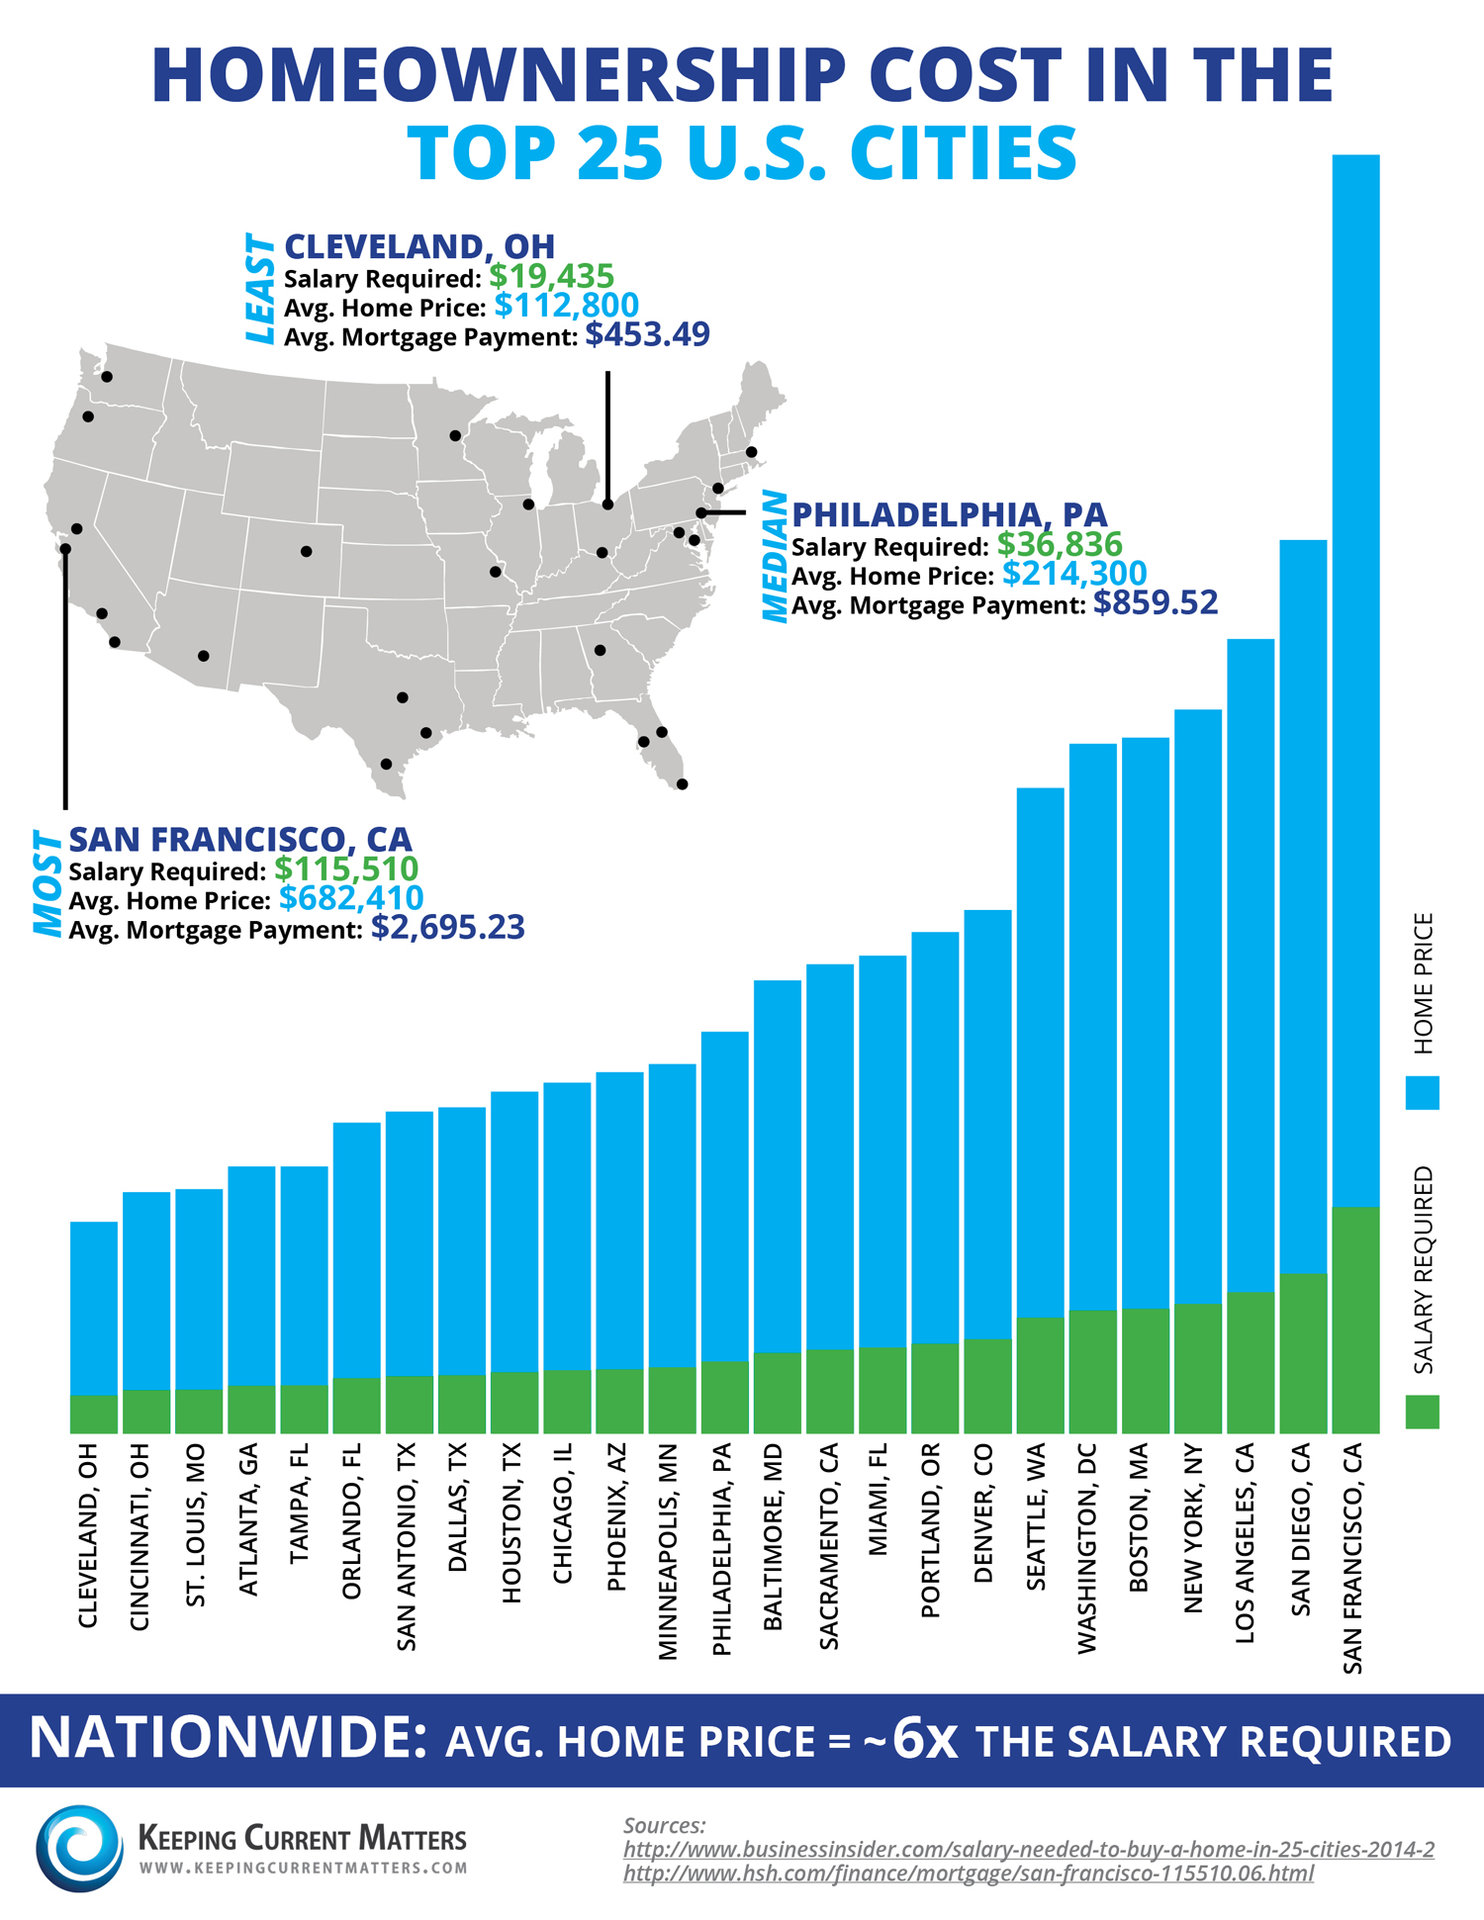 http://www.keepingcurrentmatters.com/wp-content/uploads/2014/04/20140425-Salaries-Cities-Infographic.jpg